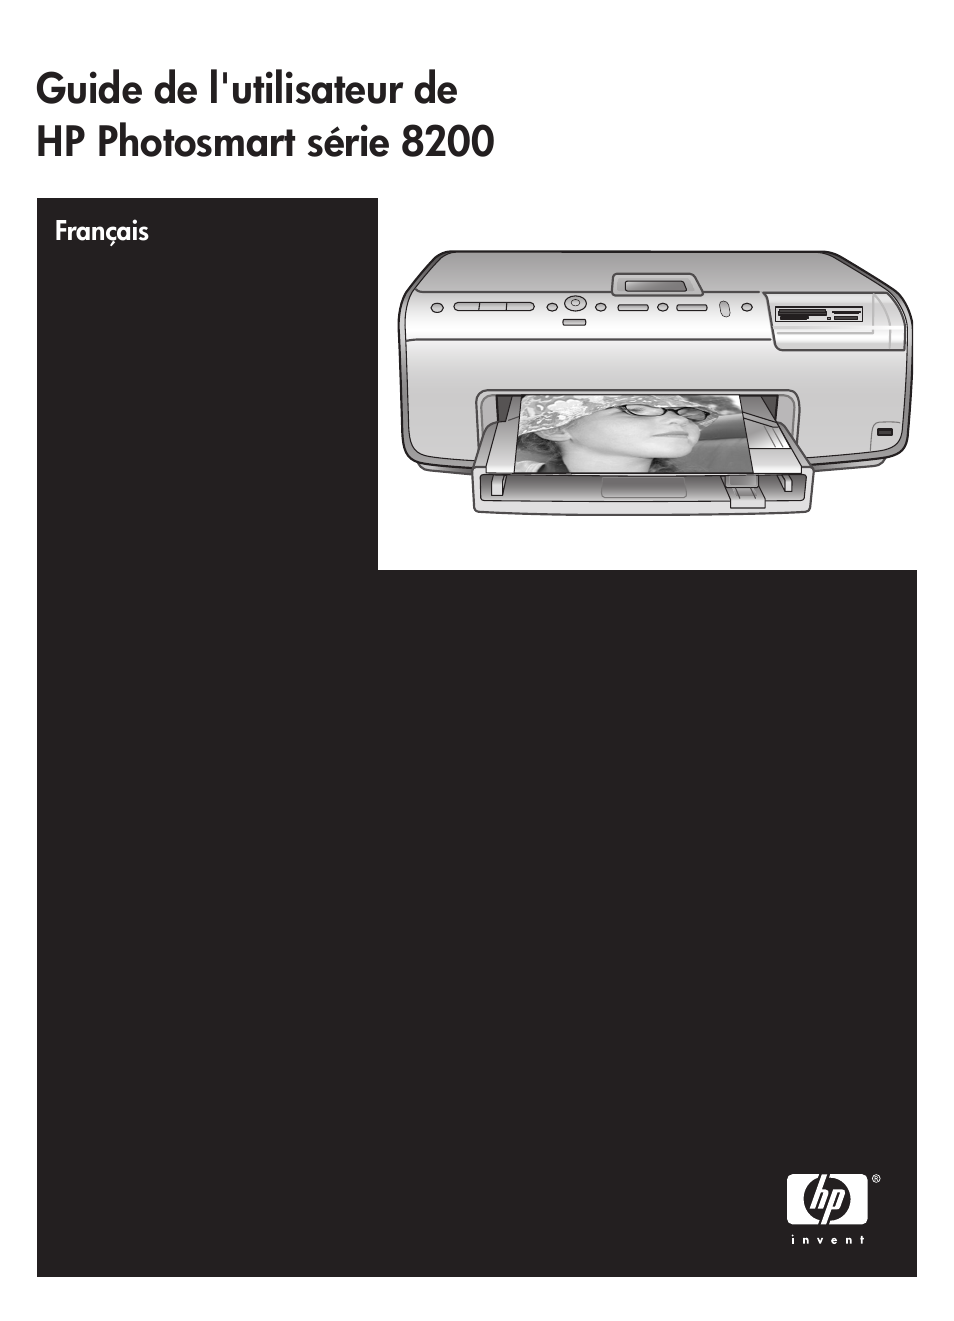 HP Photosmart 8250 Printer Manuel d'utilisation | Pages: 91